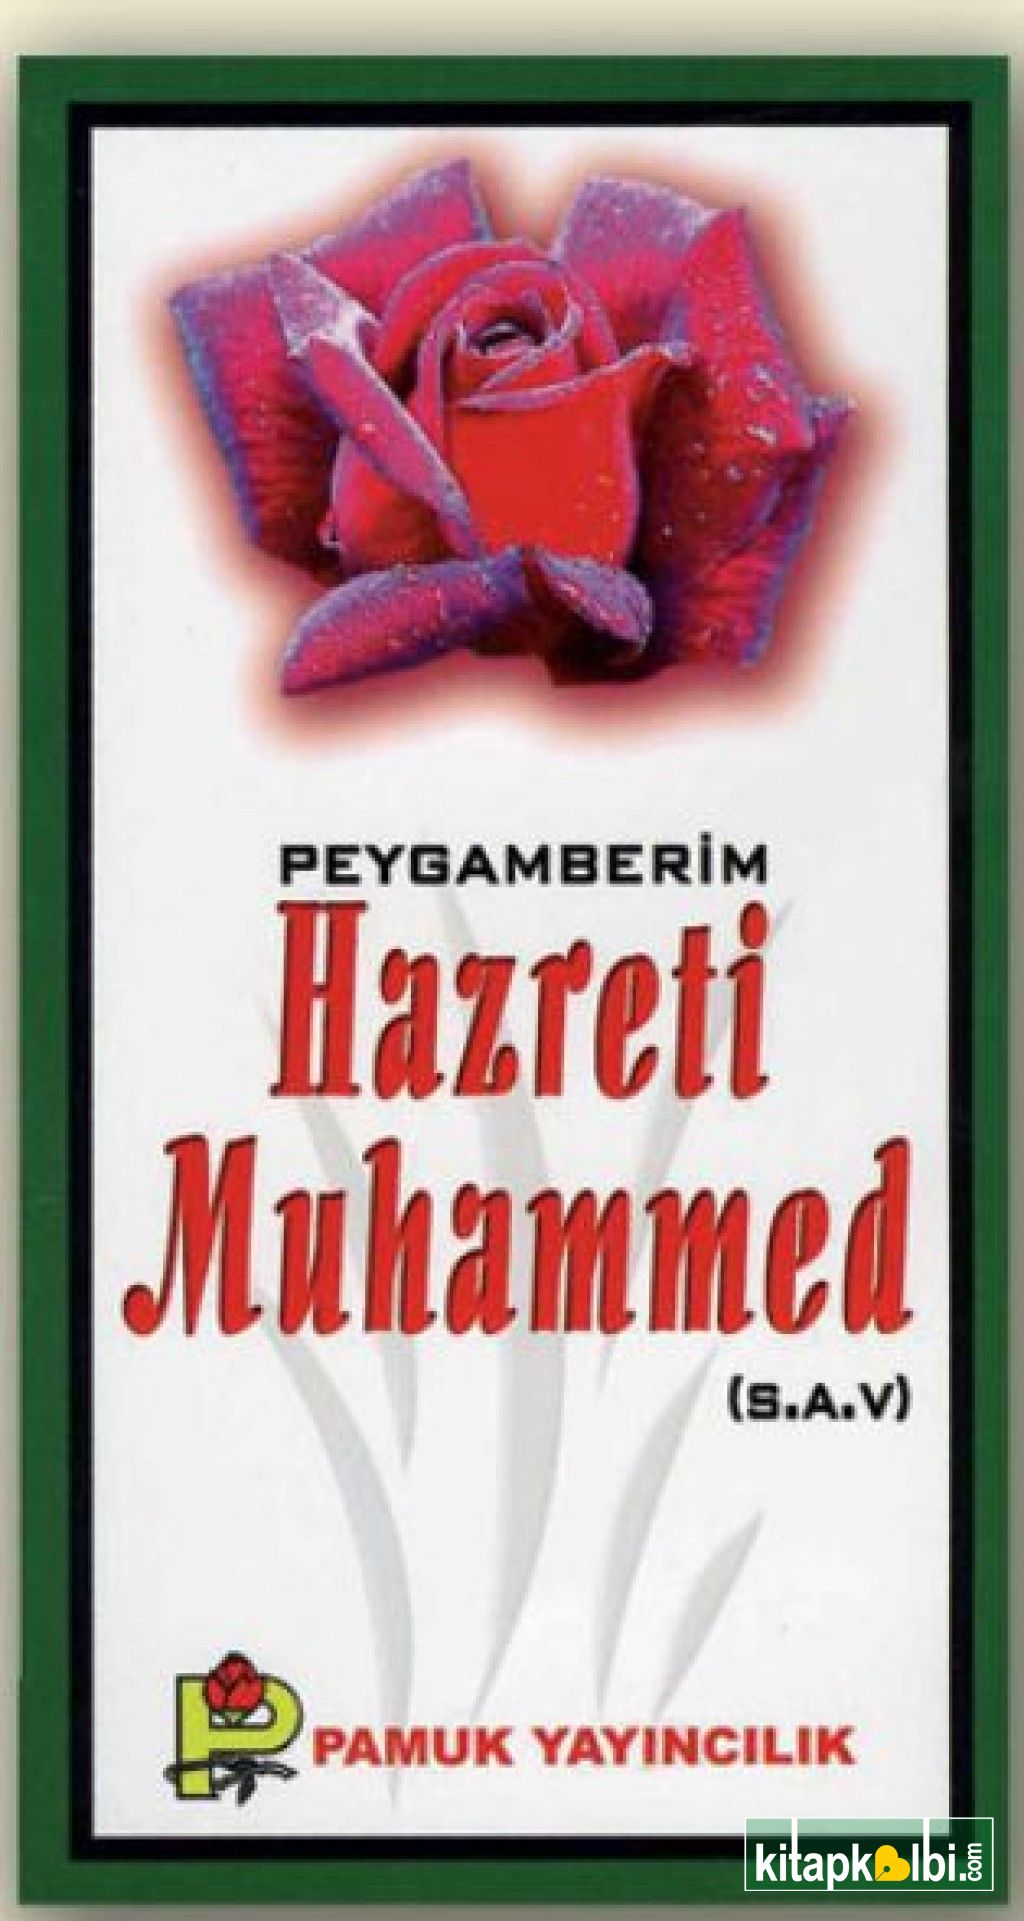 Peygamberim Hazreti Muhammed (s.a.v.) Peygamber 016